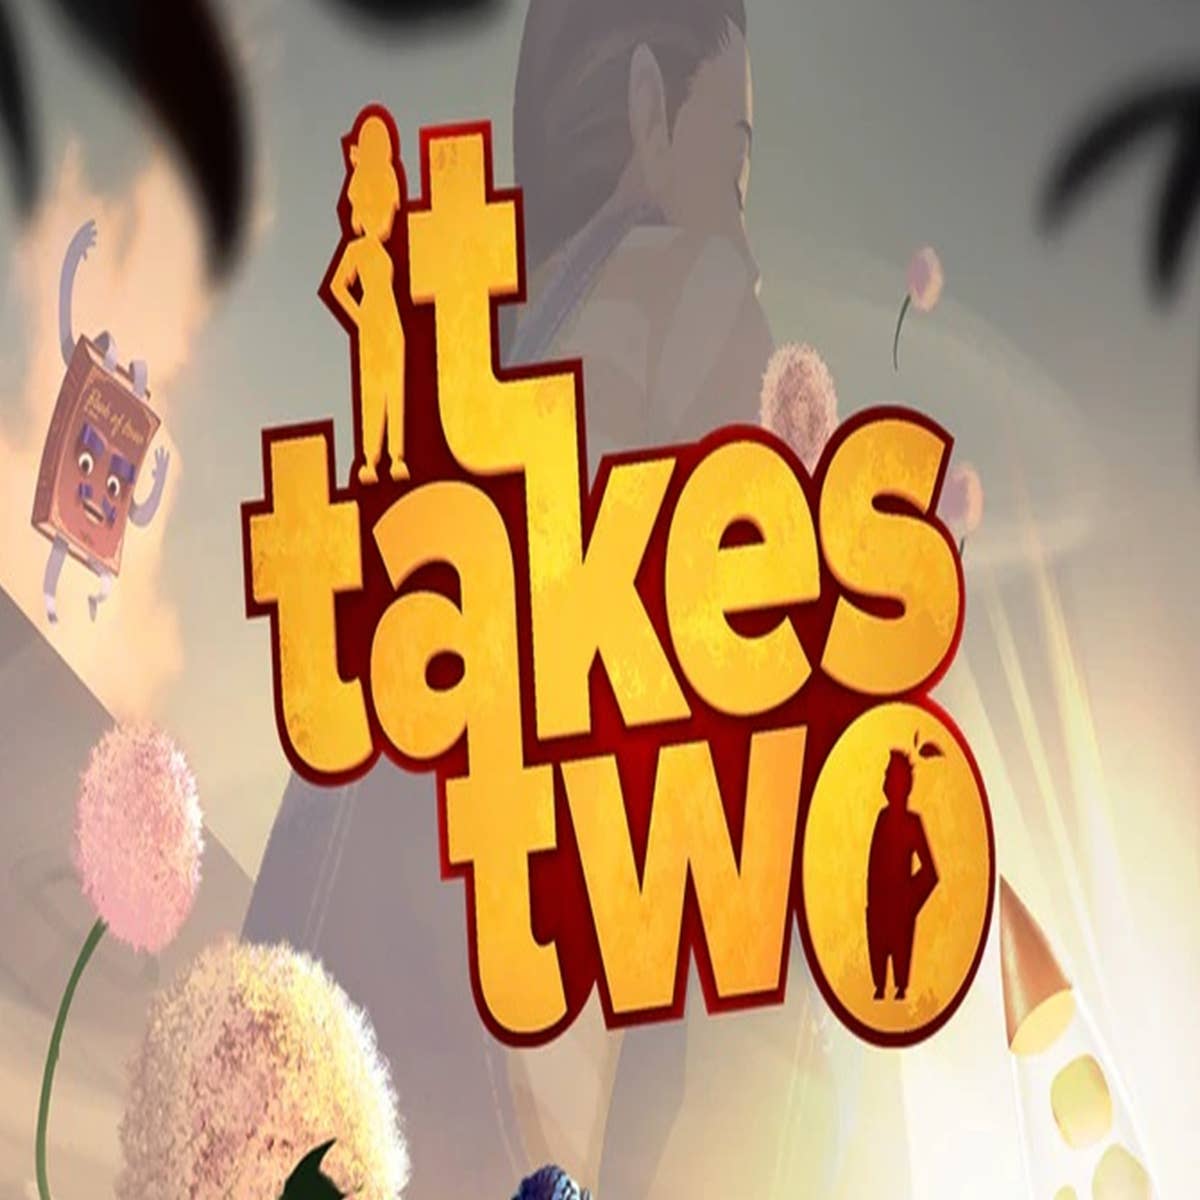 Descubra It Takes Two, o título premiado da Hazelight – Electronic Arts.